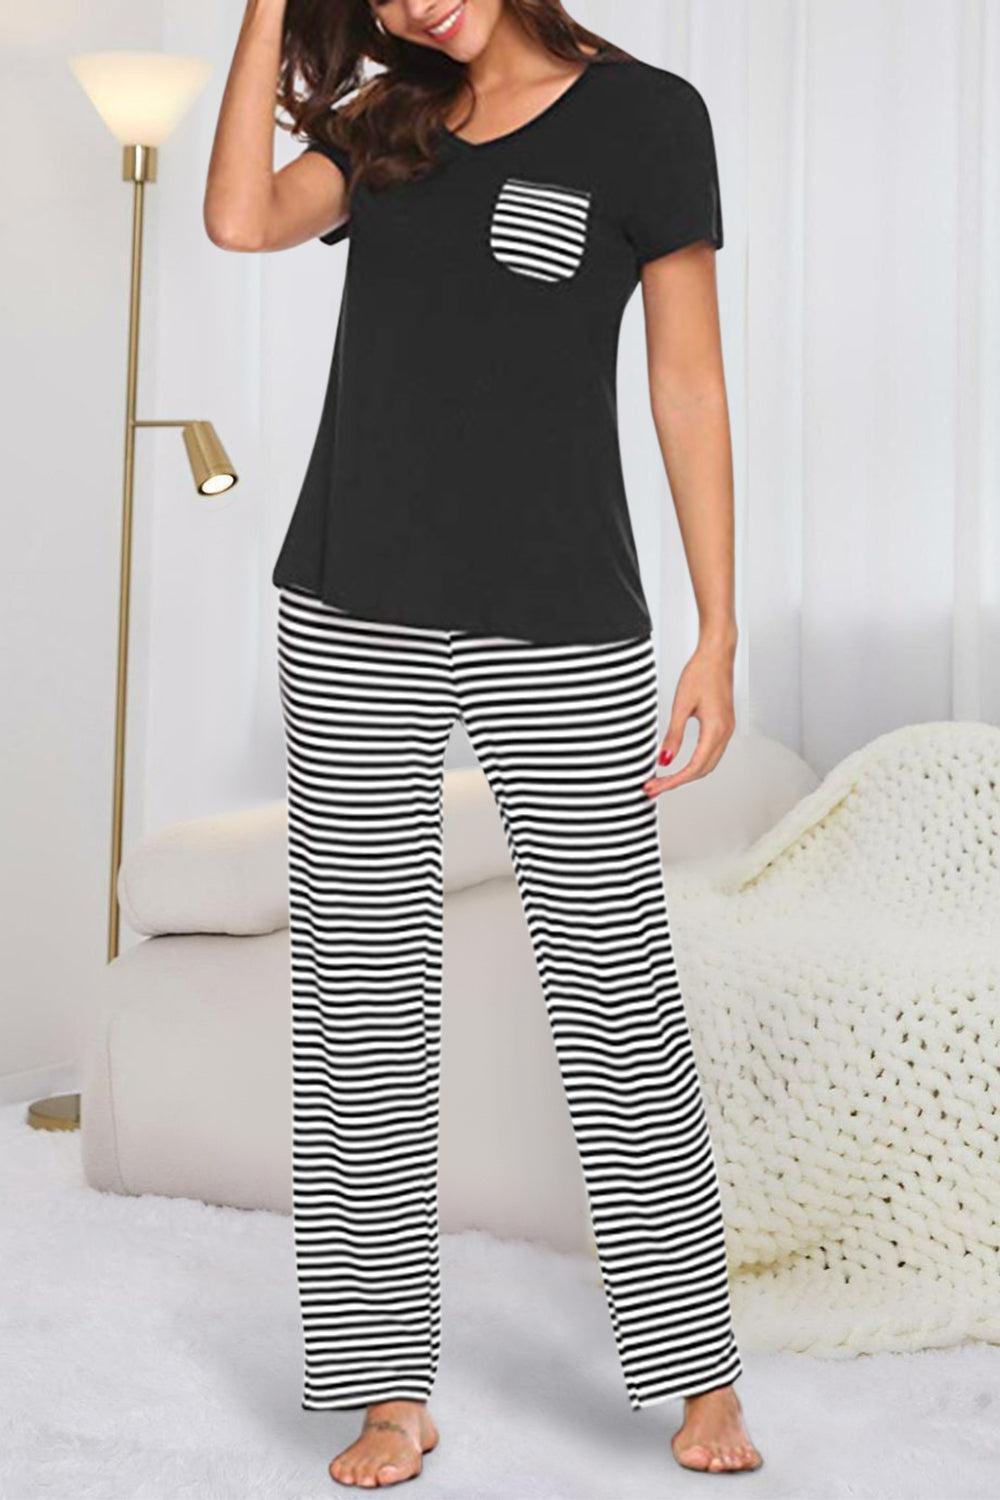 a woman wearing a black and white striped pajama set